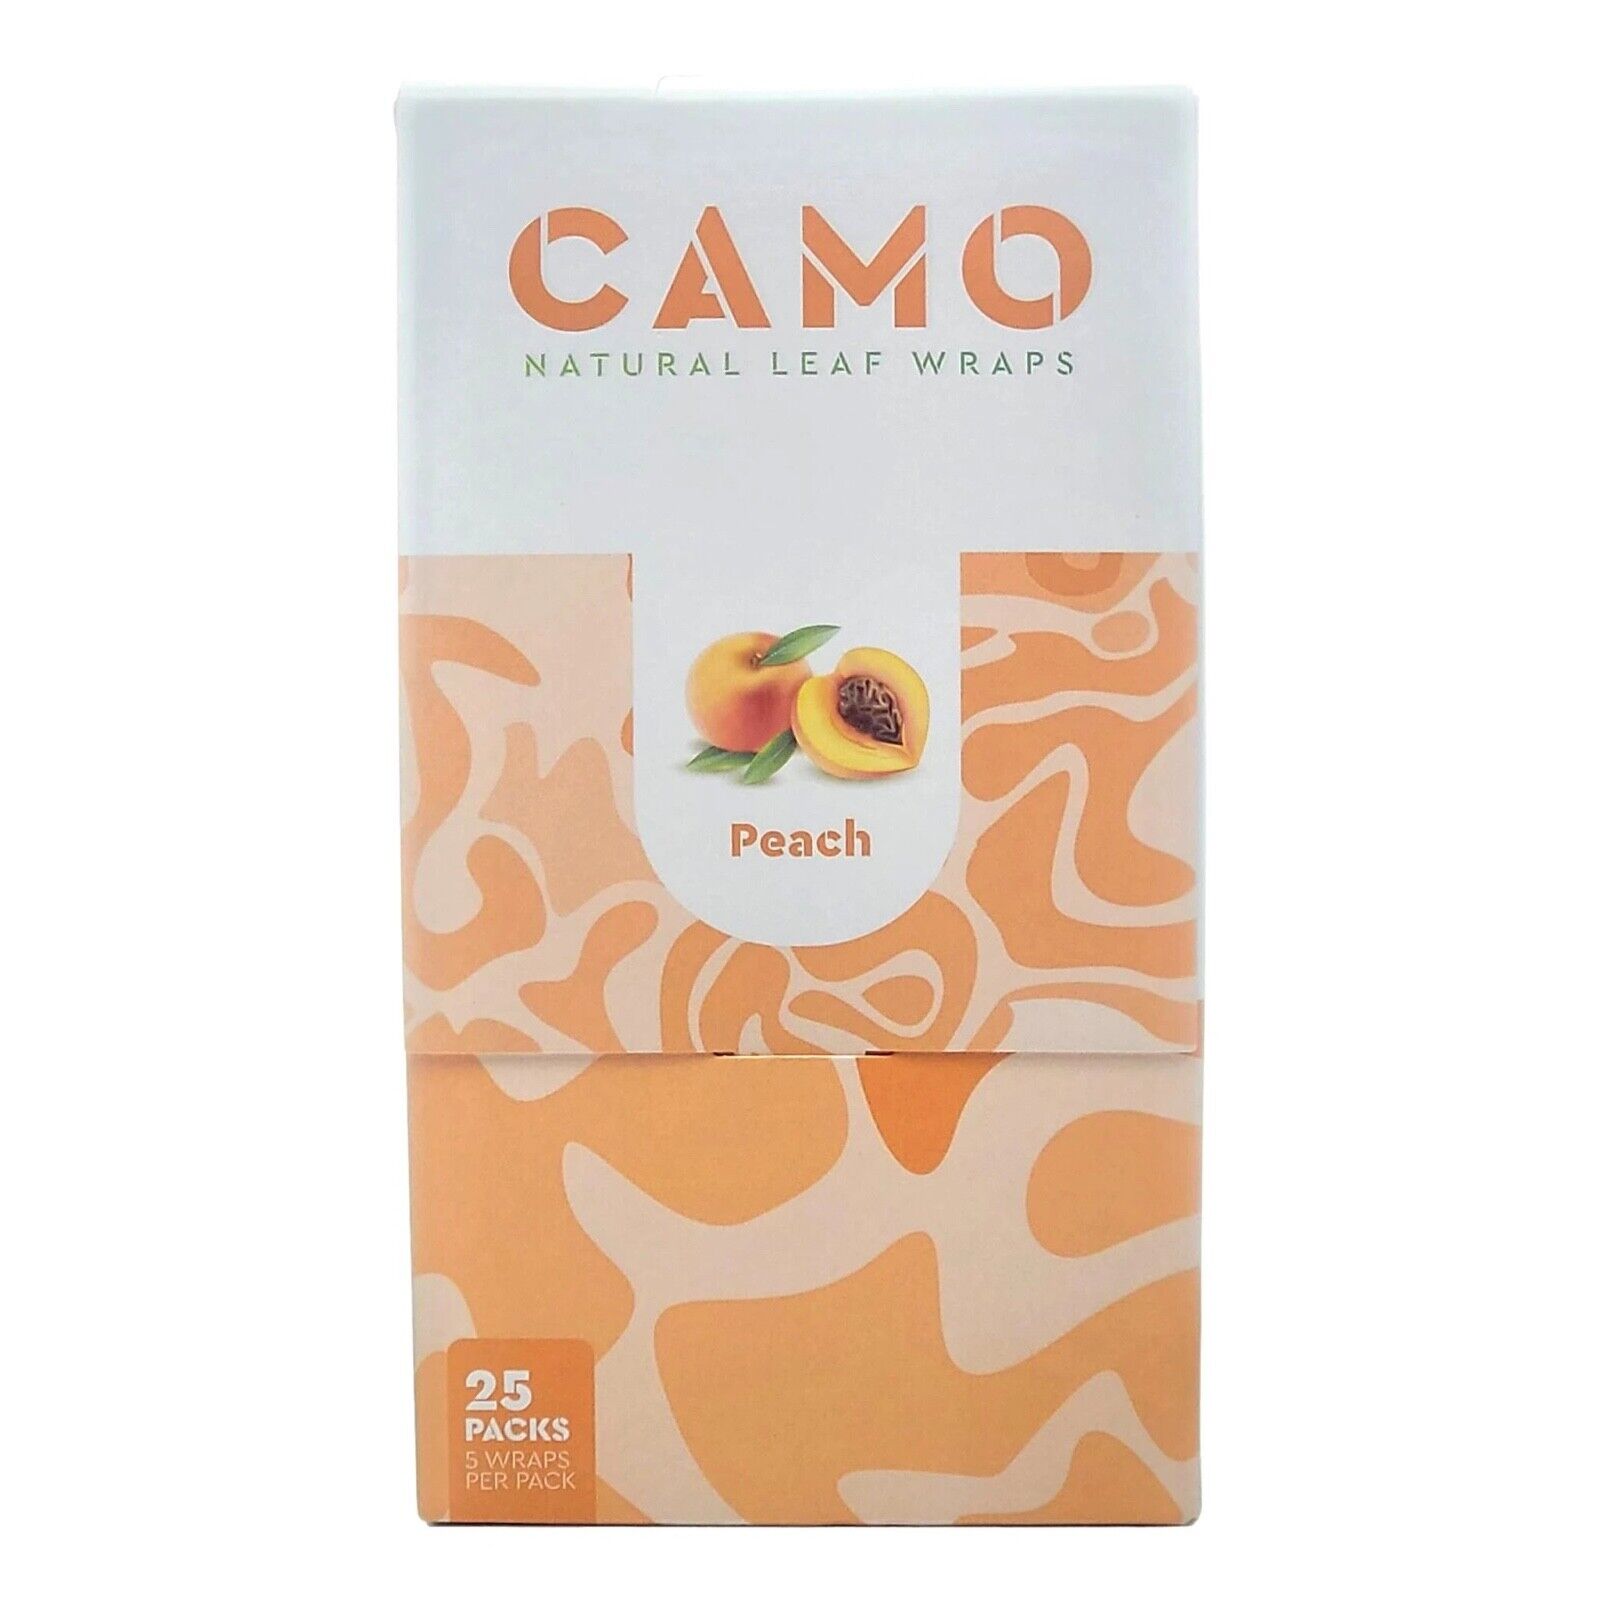 CAMO Self-Rolling Wraps 125 wraps - PEACH  Full box- FAST SHIPPING